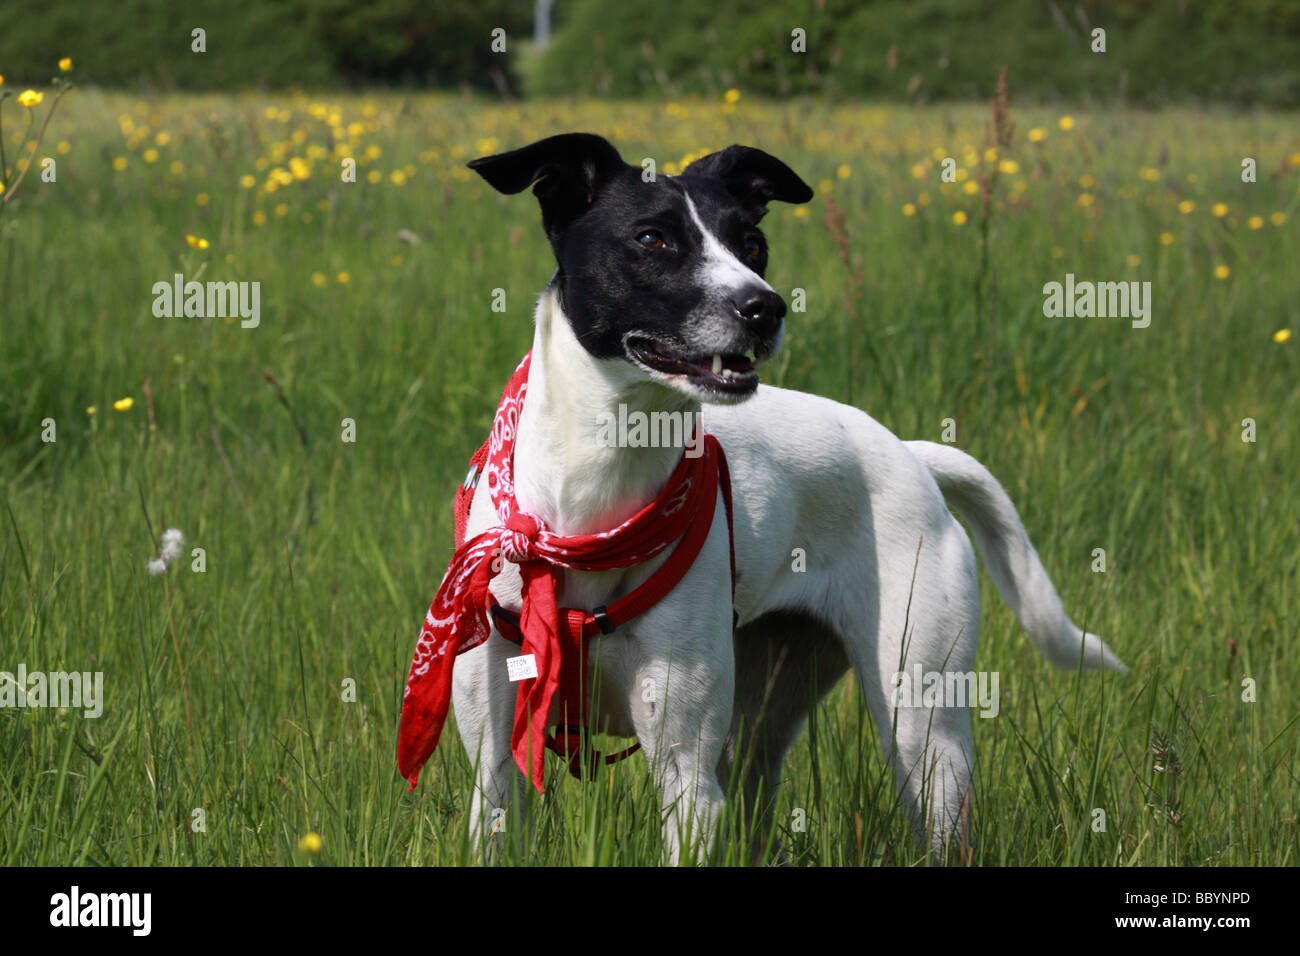 Thoroughbred, mezcla de razas, de perro Foto de stock